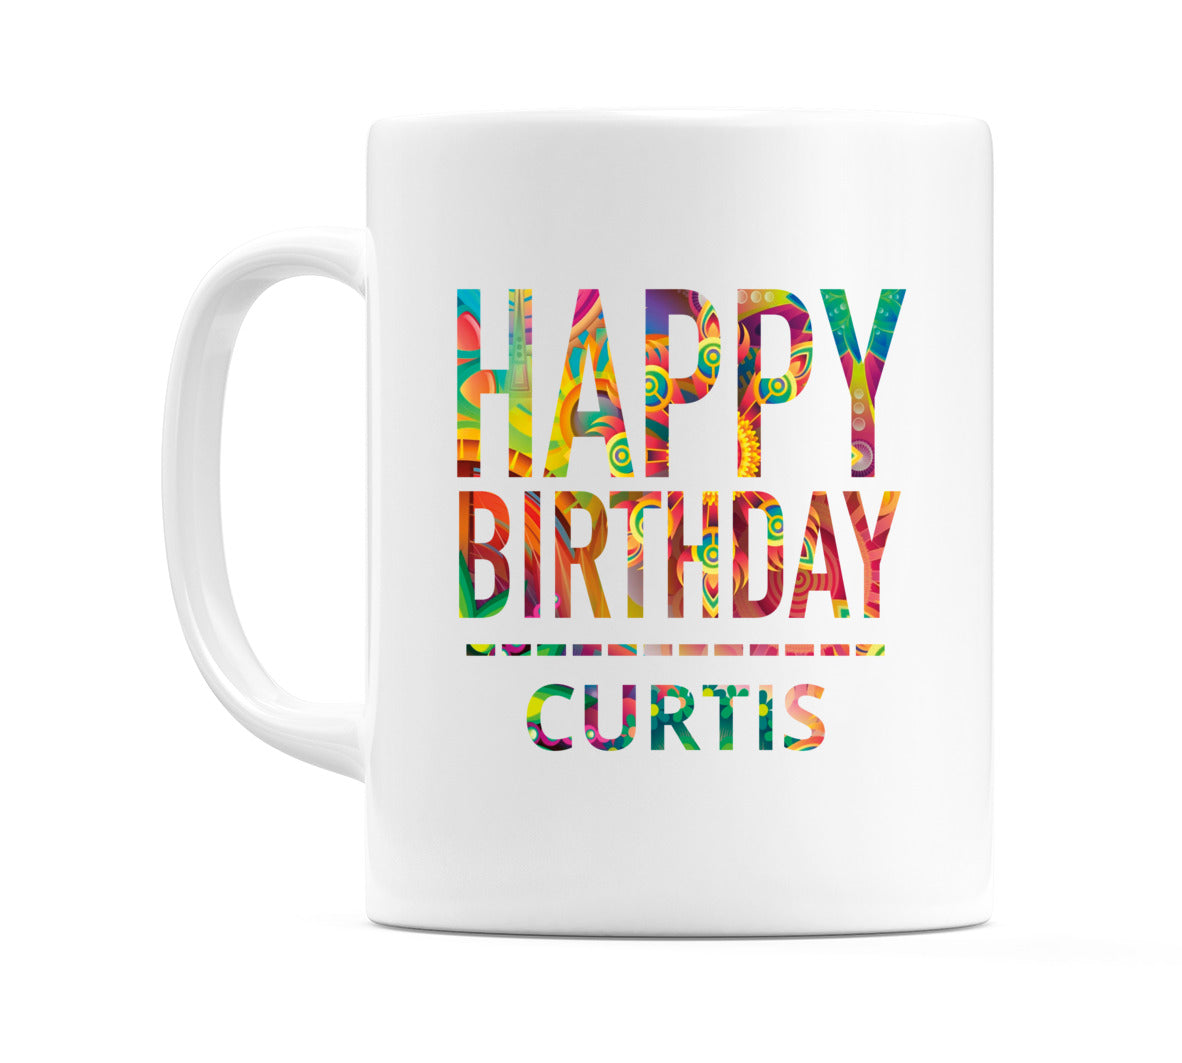 Happy Birthday Curtis (Tie Dye Effect) Mug Cup by WeDoMugs